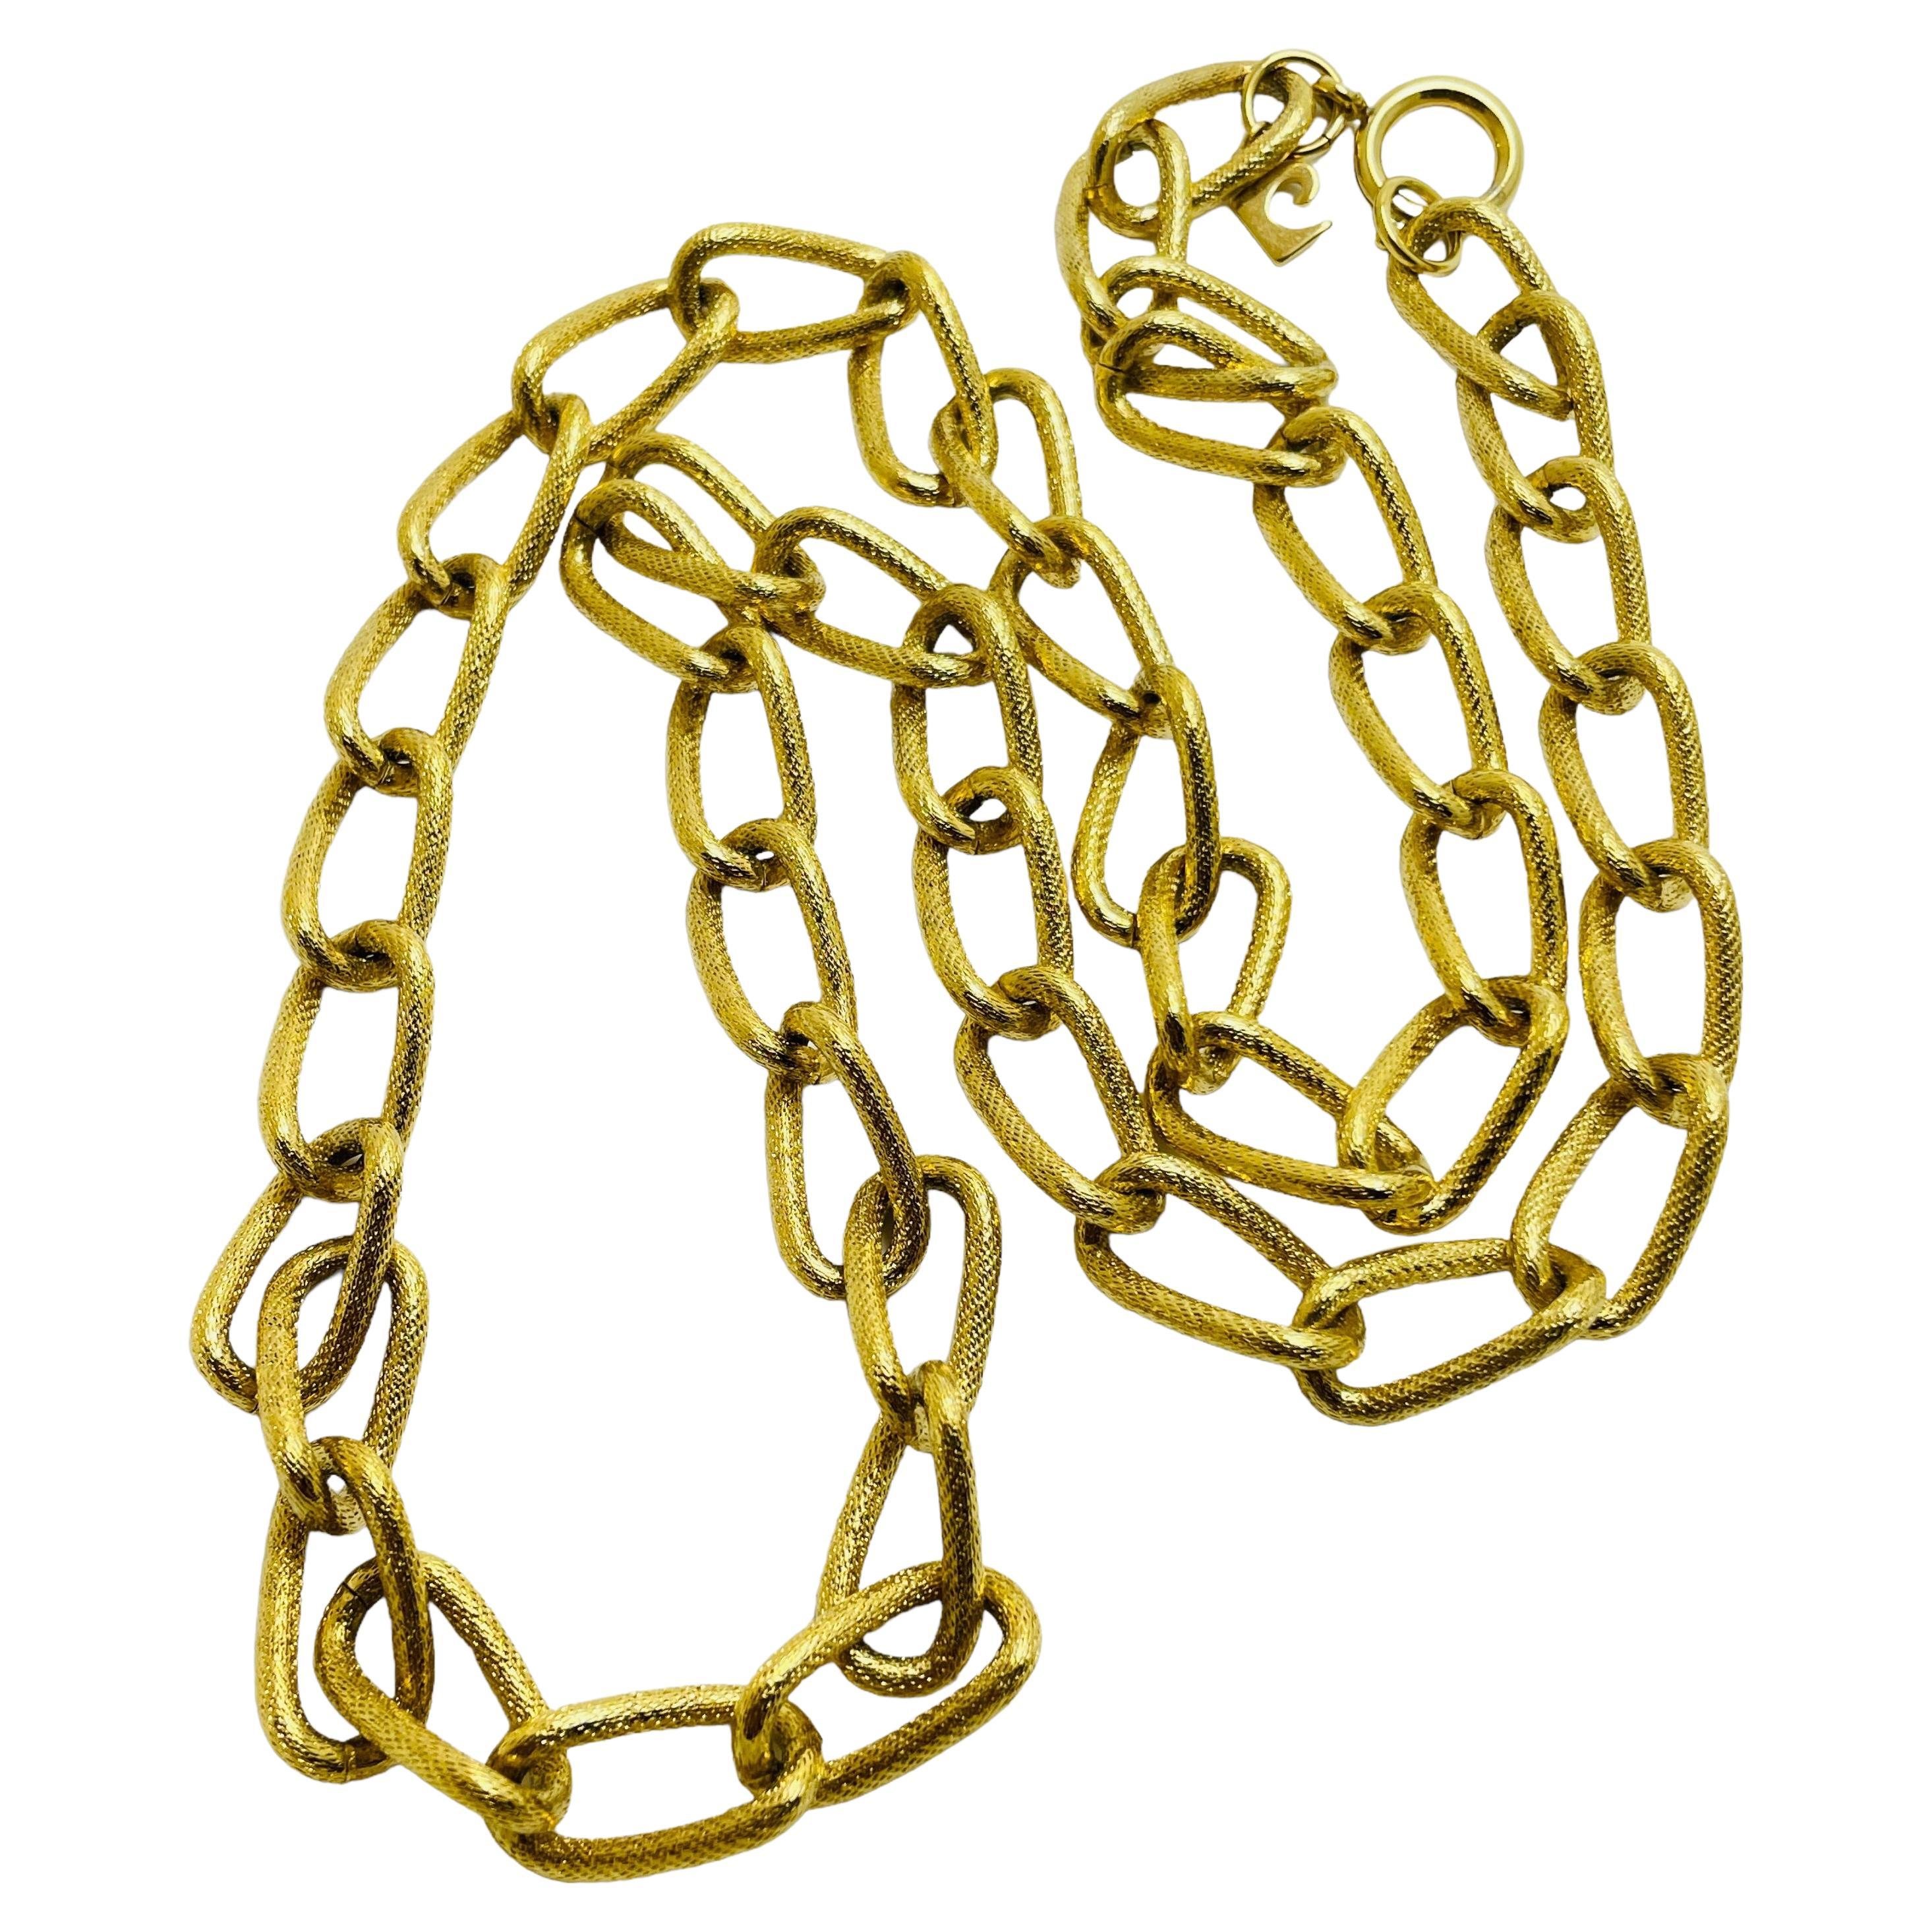 PIERRE CARDIN vintage gold chain designer runway necklace For Sale